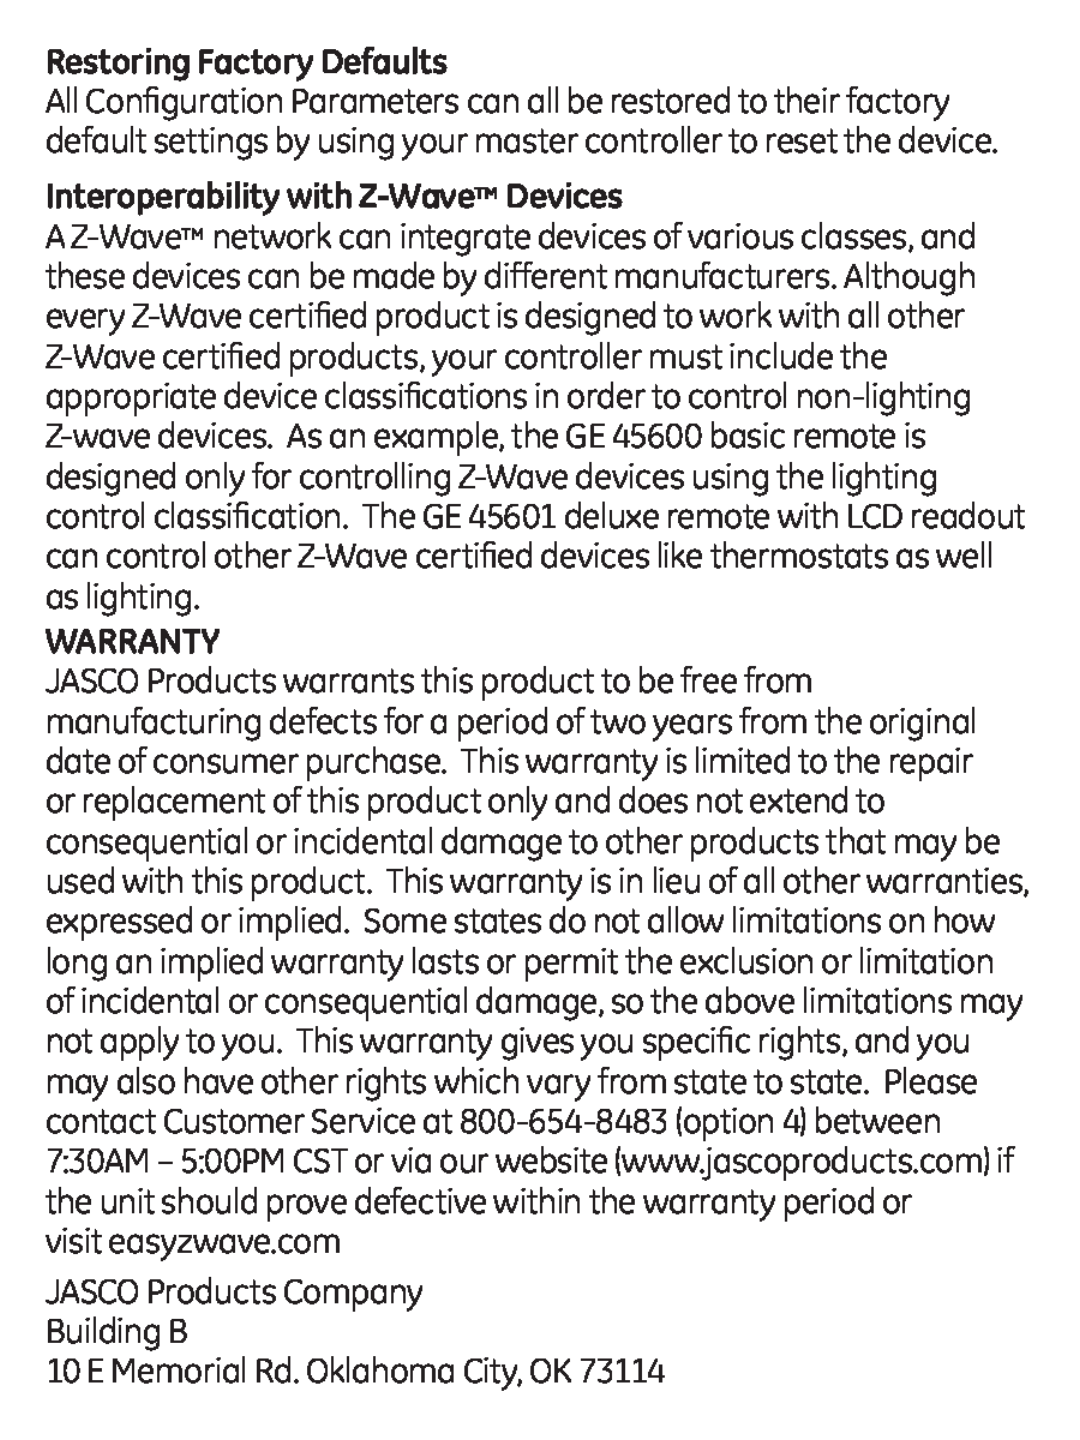 Jasco ZWAVEKIT manual Restoring Factory Defaults, Interoperability with Z-Wave Devices, Warranty 